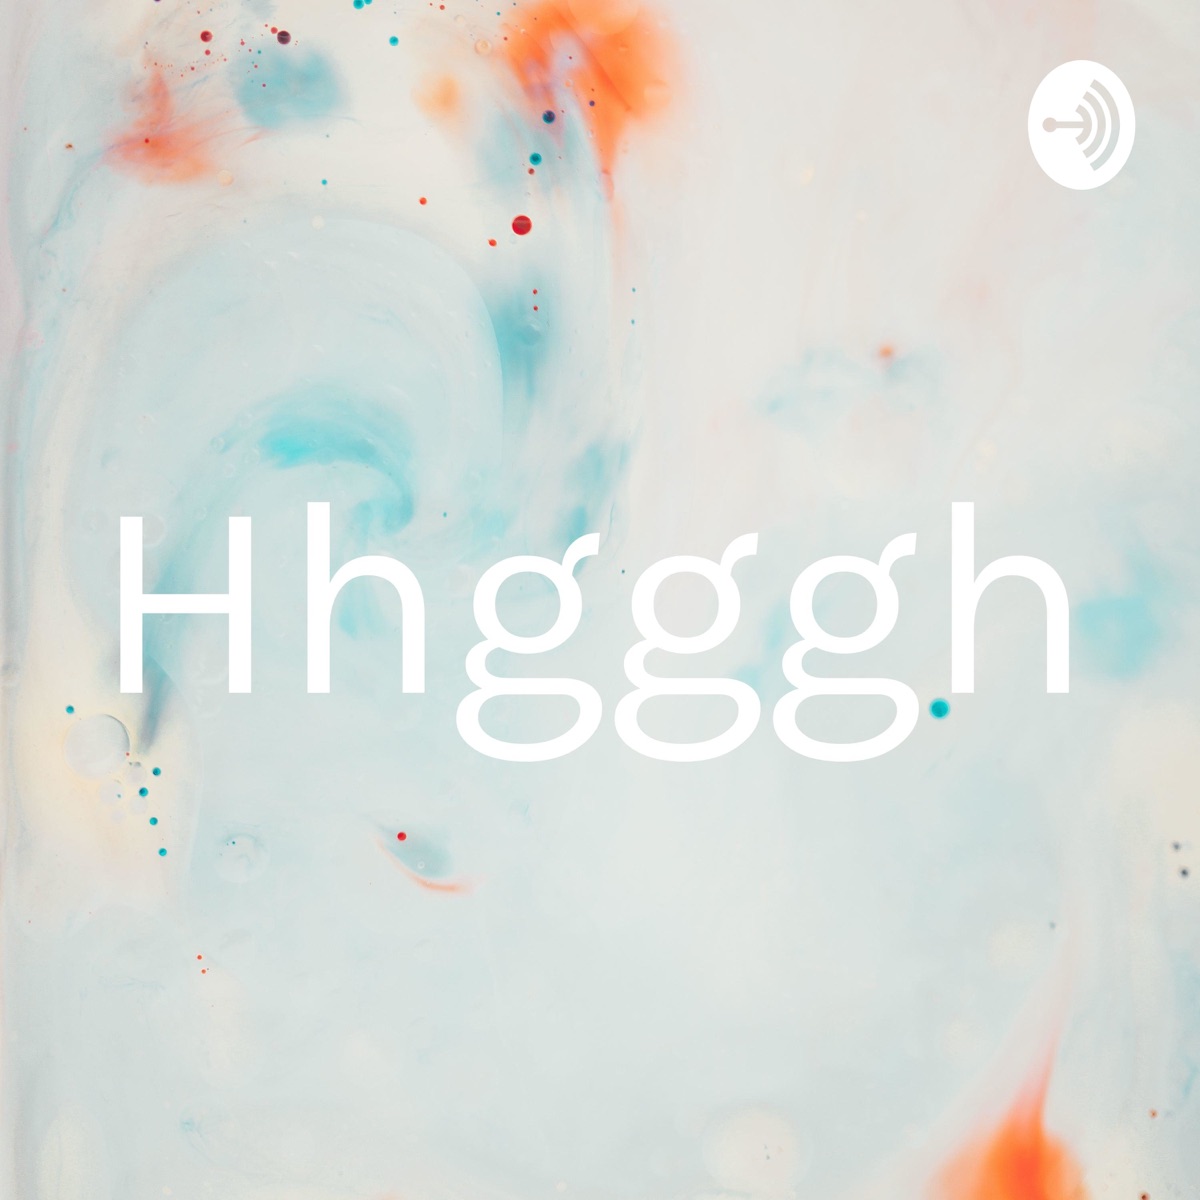 Hhgggh - Arts Podcast